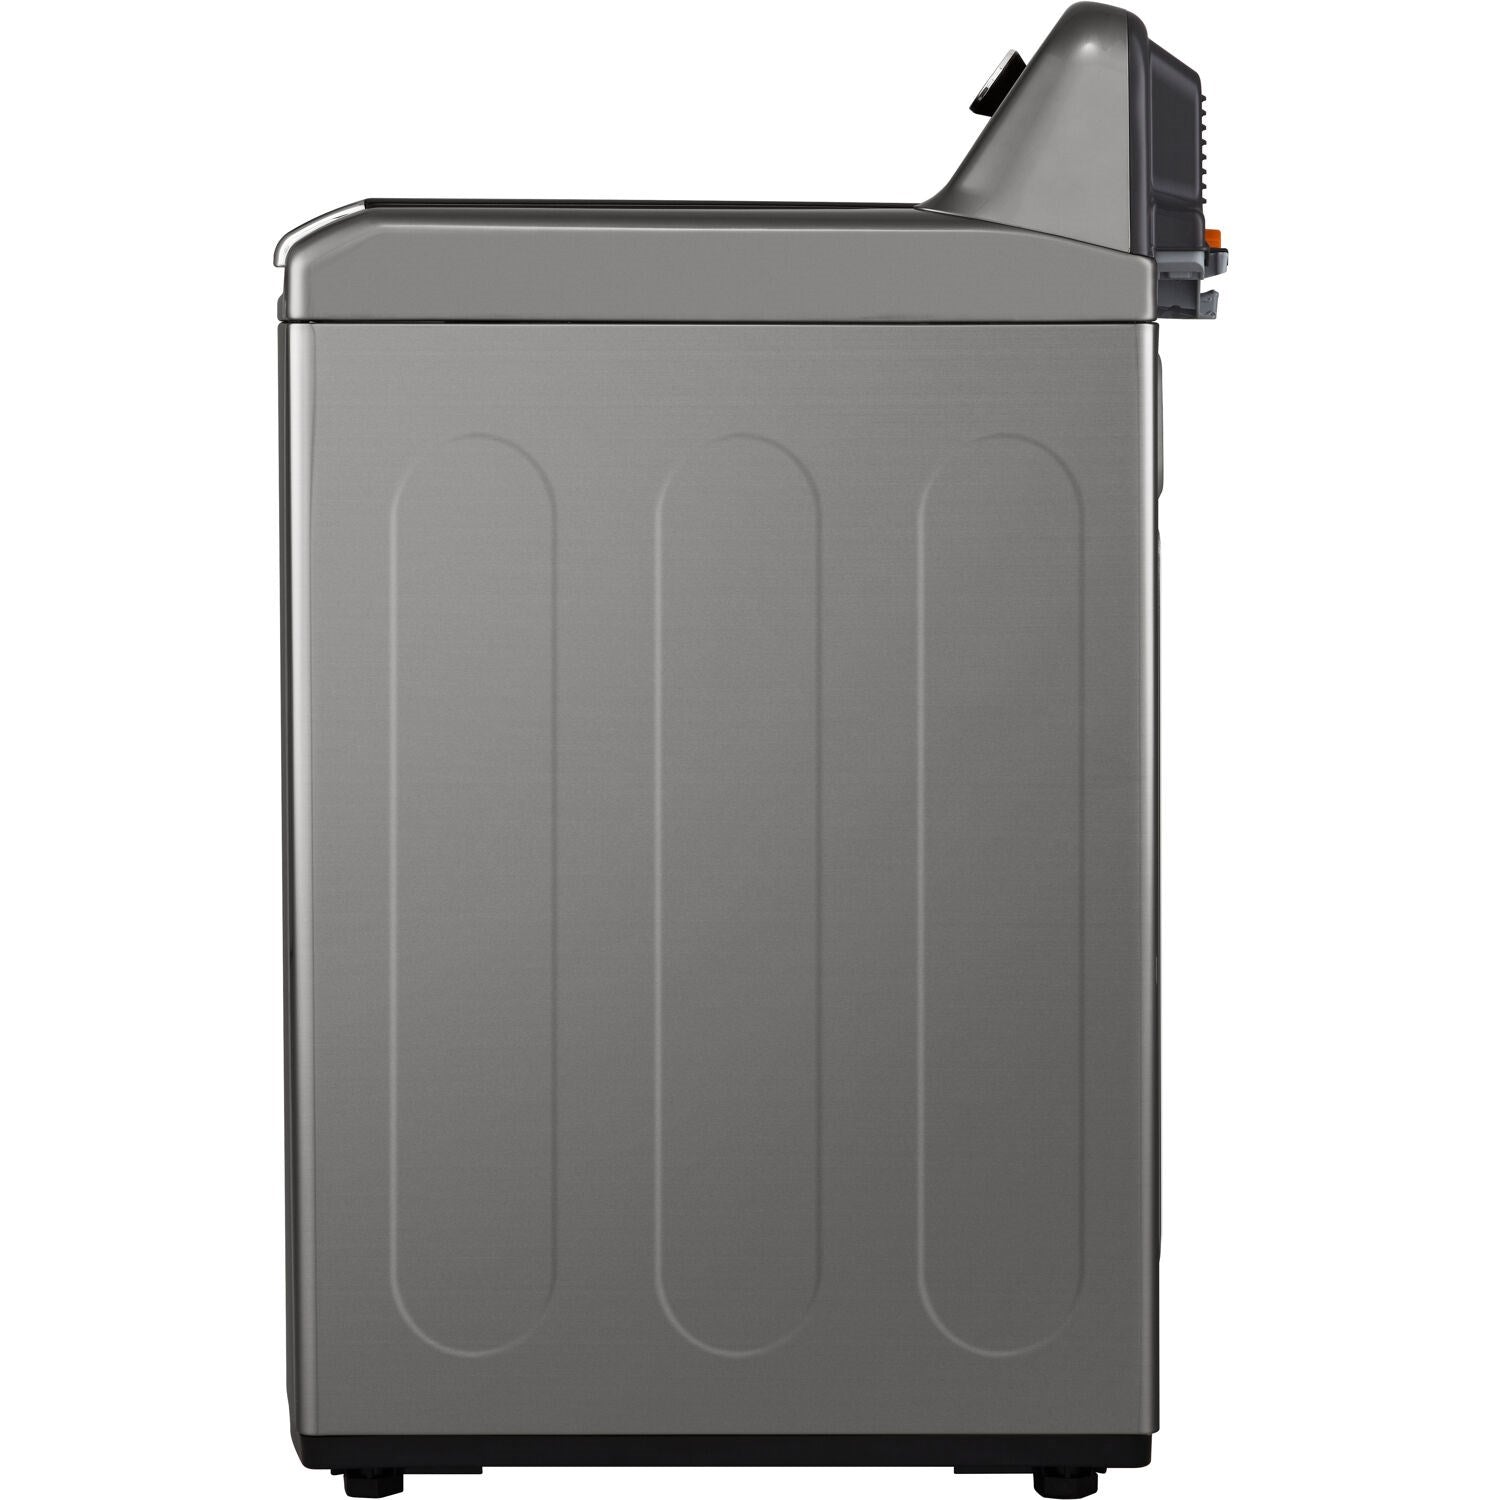 LG - 5.5 Cu. Ft. Smart Top Load Washer with TurboWash3D | WT7400CV